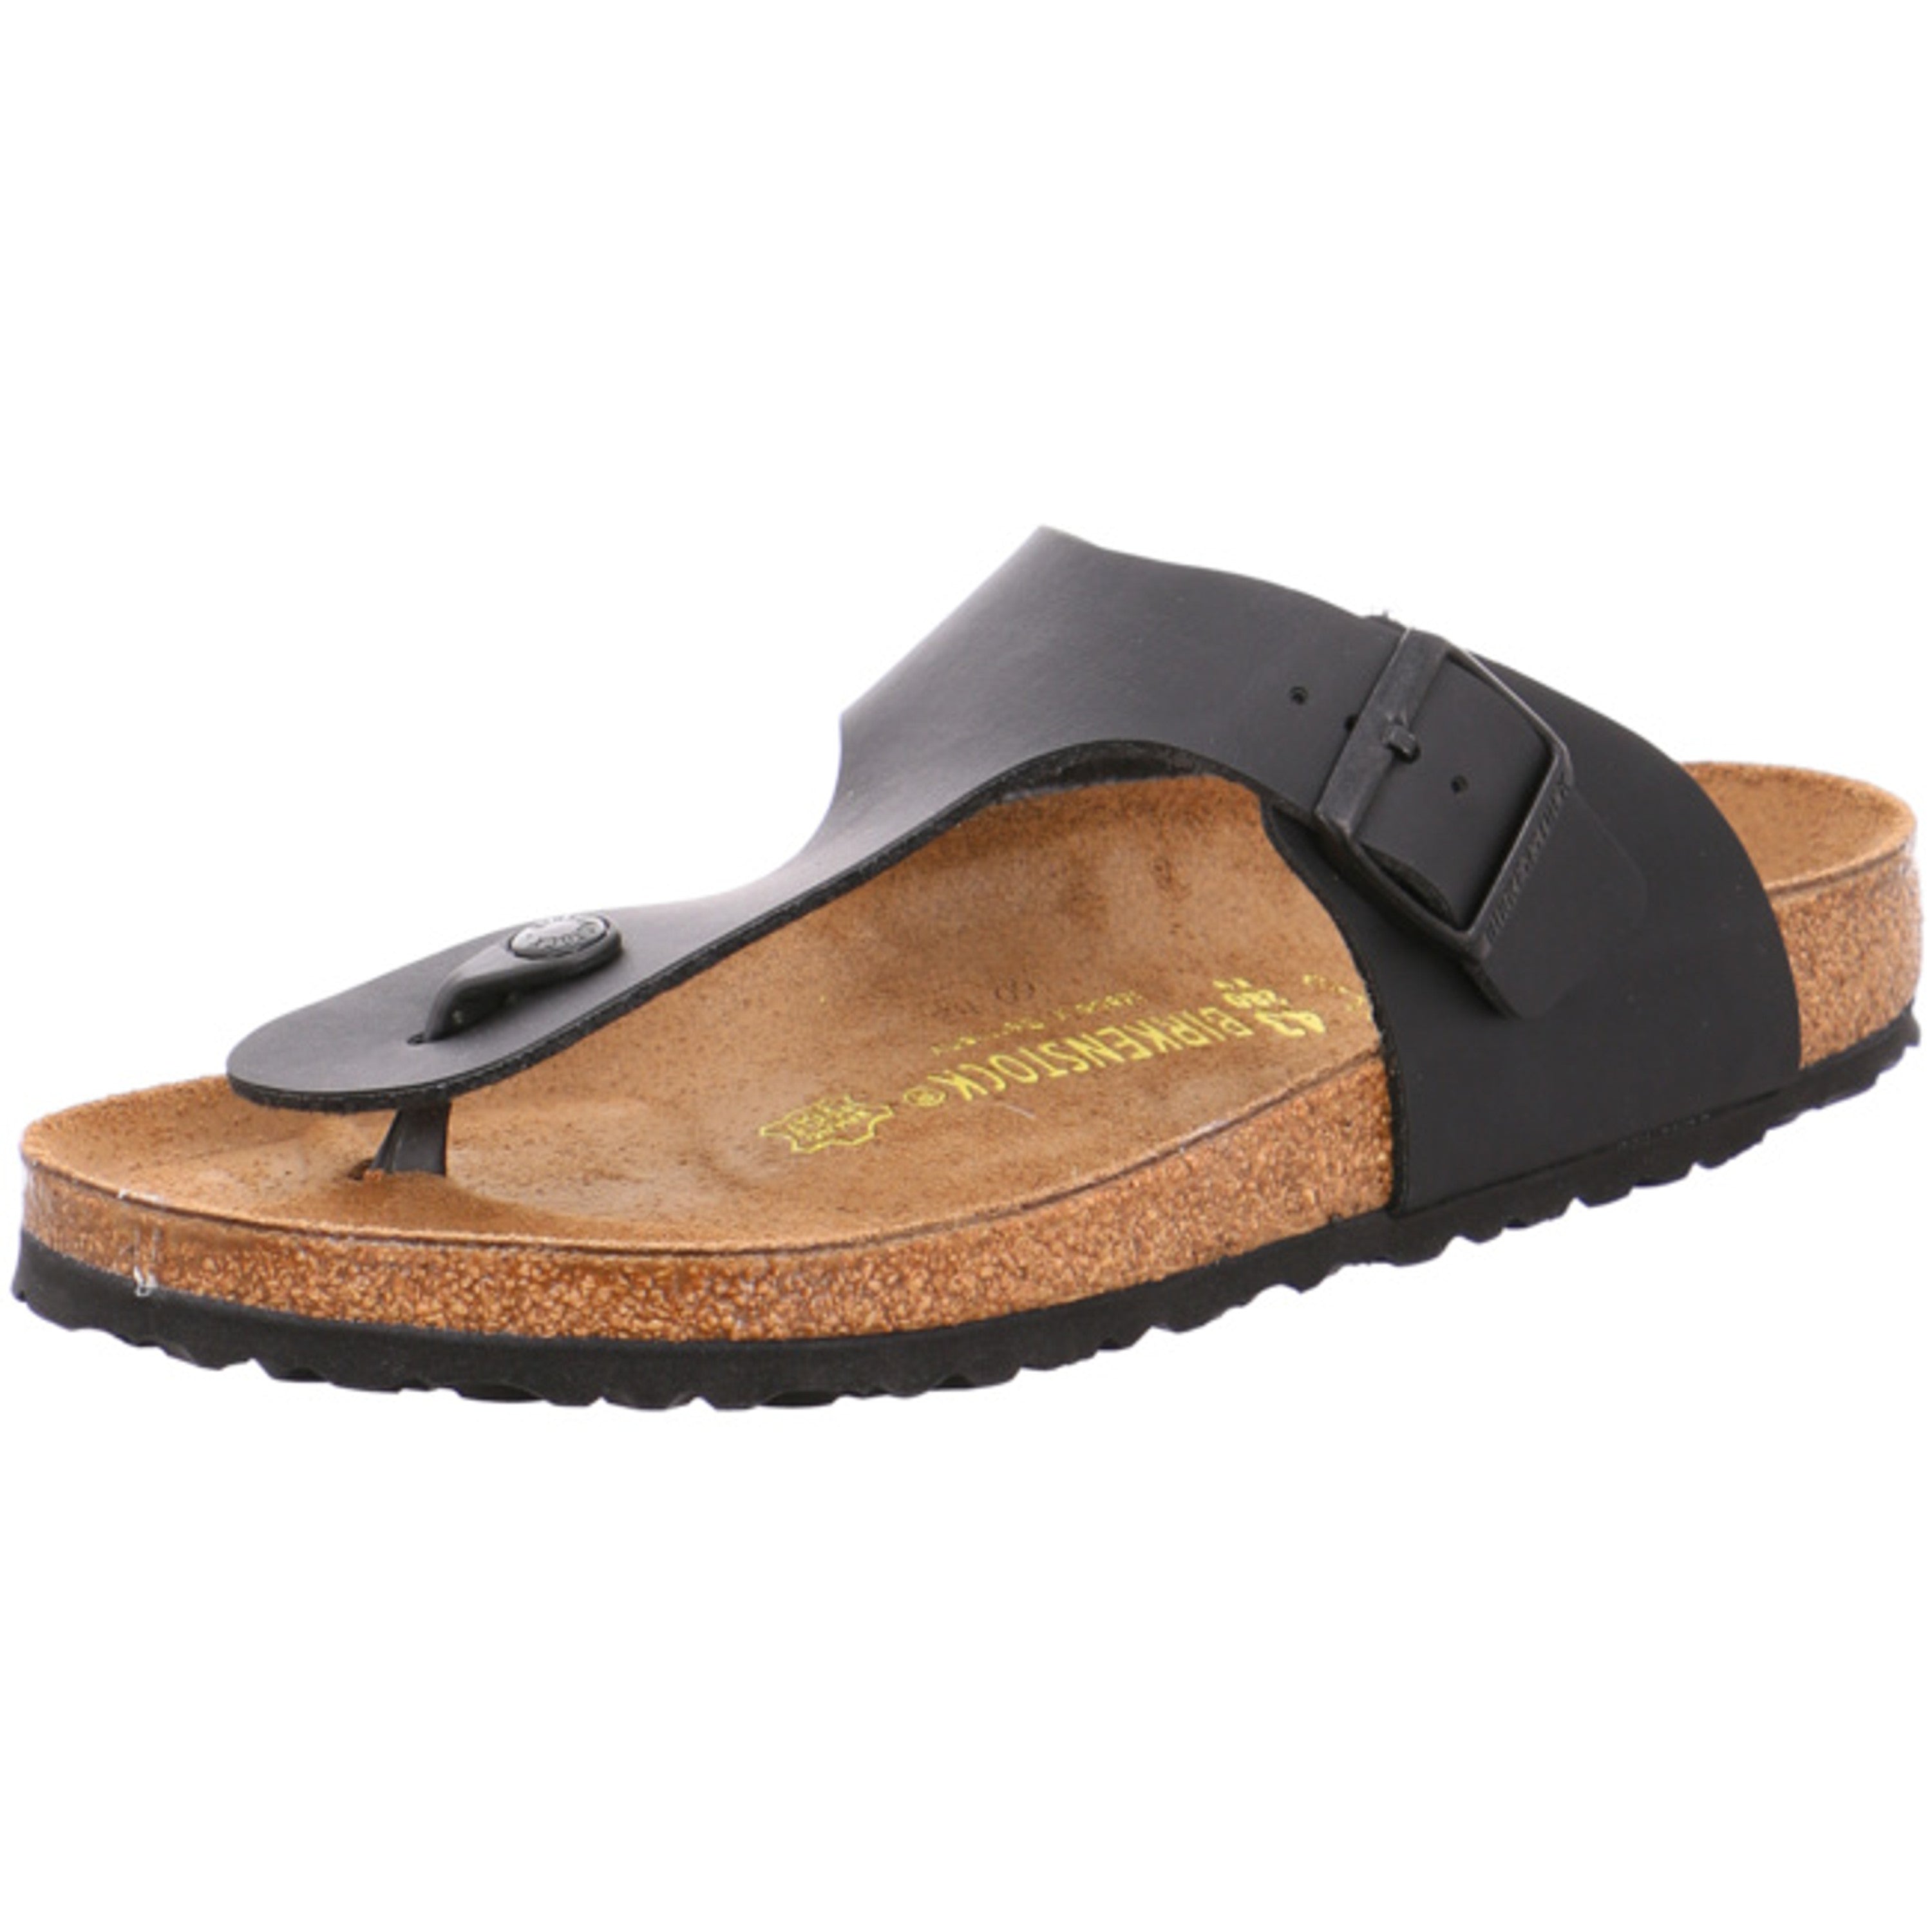 Birkenstock Ramses Thongs regular black Birko Flor Flip Flops Shoes Sandals Slippers - Bartel-Shop